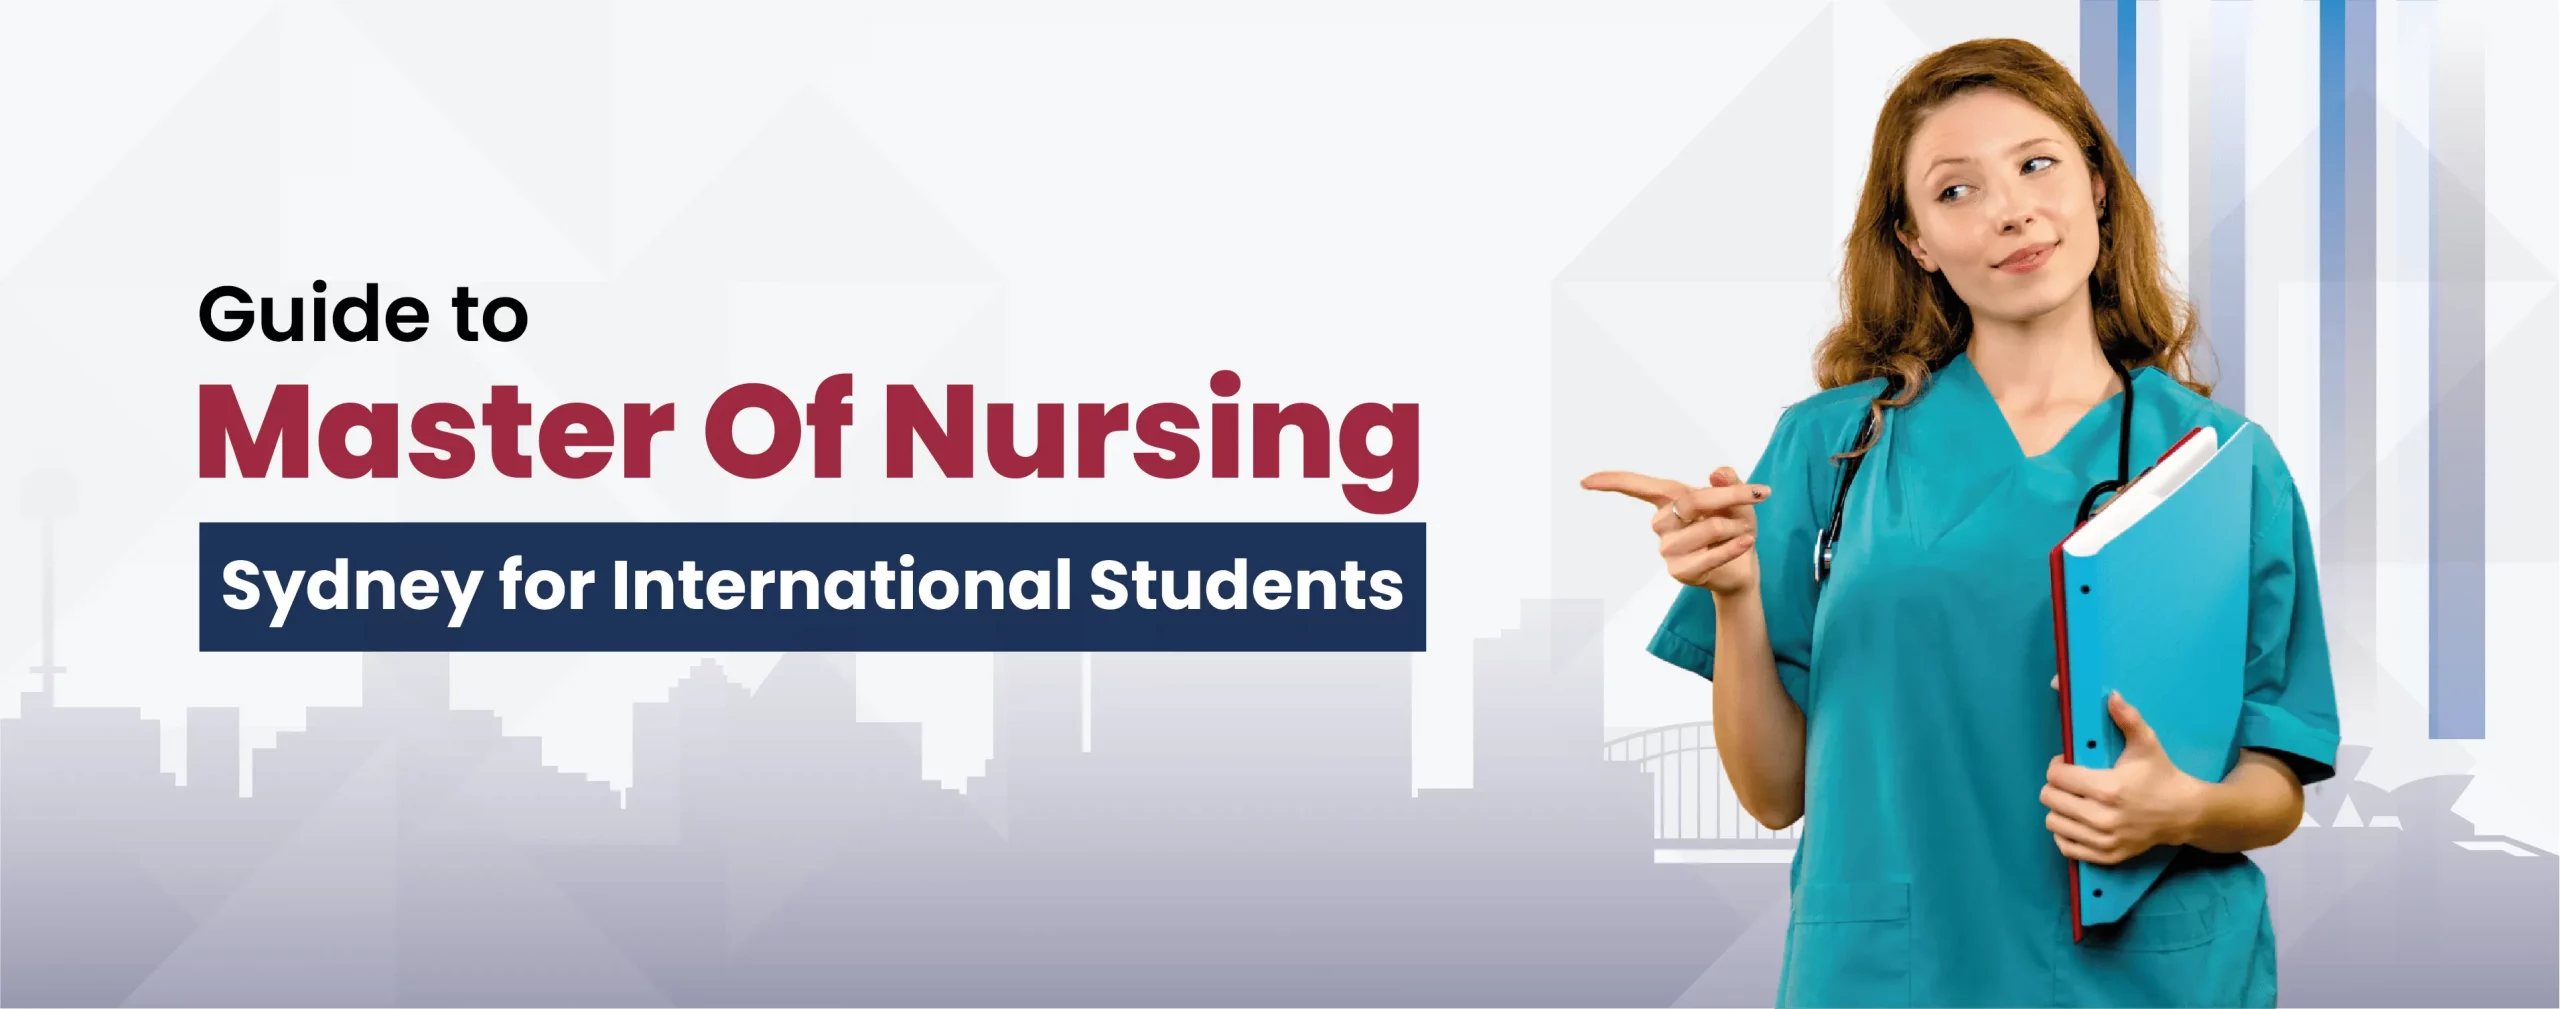 Master of Nursing in Sydney | Study Nursing Course & Degree